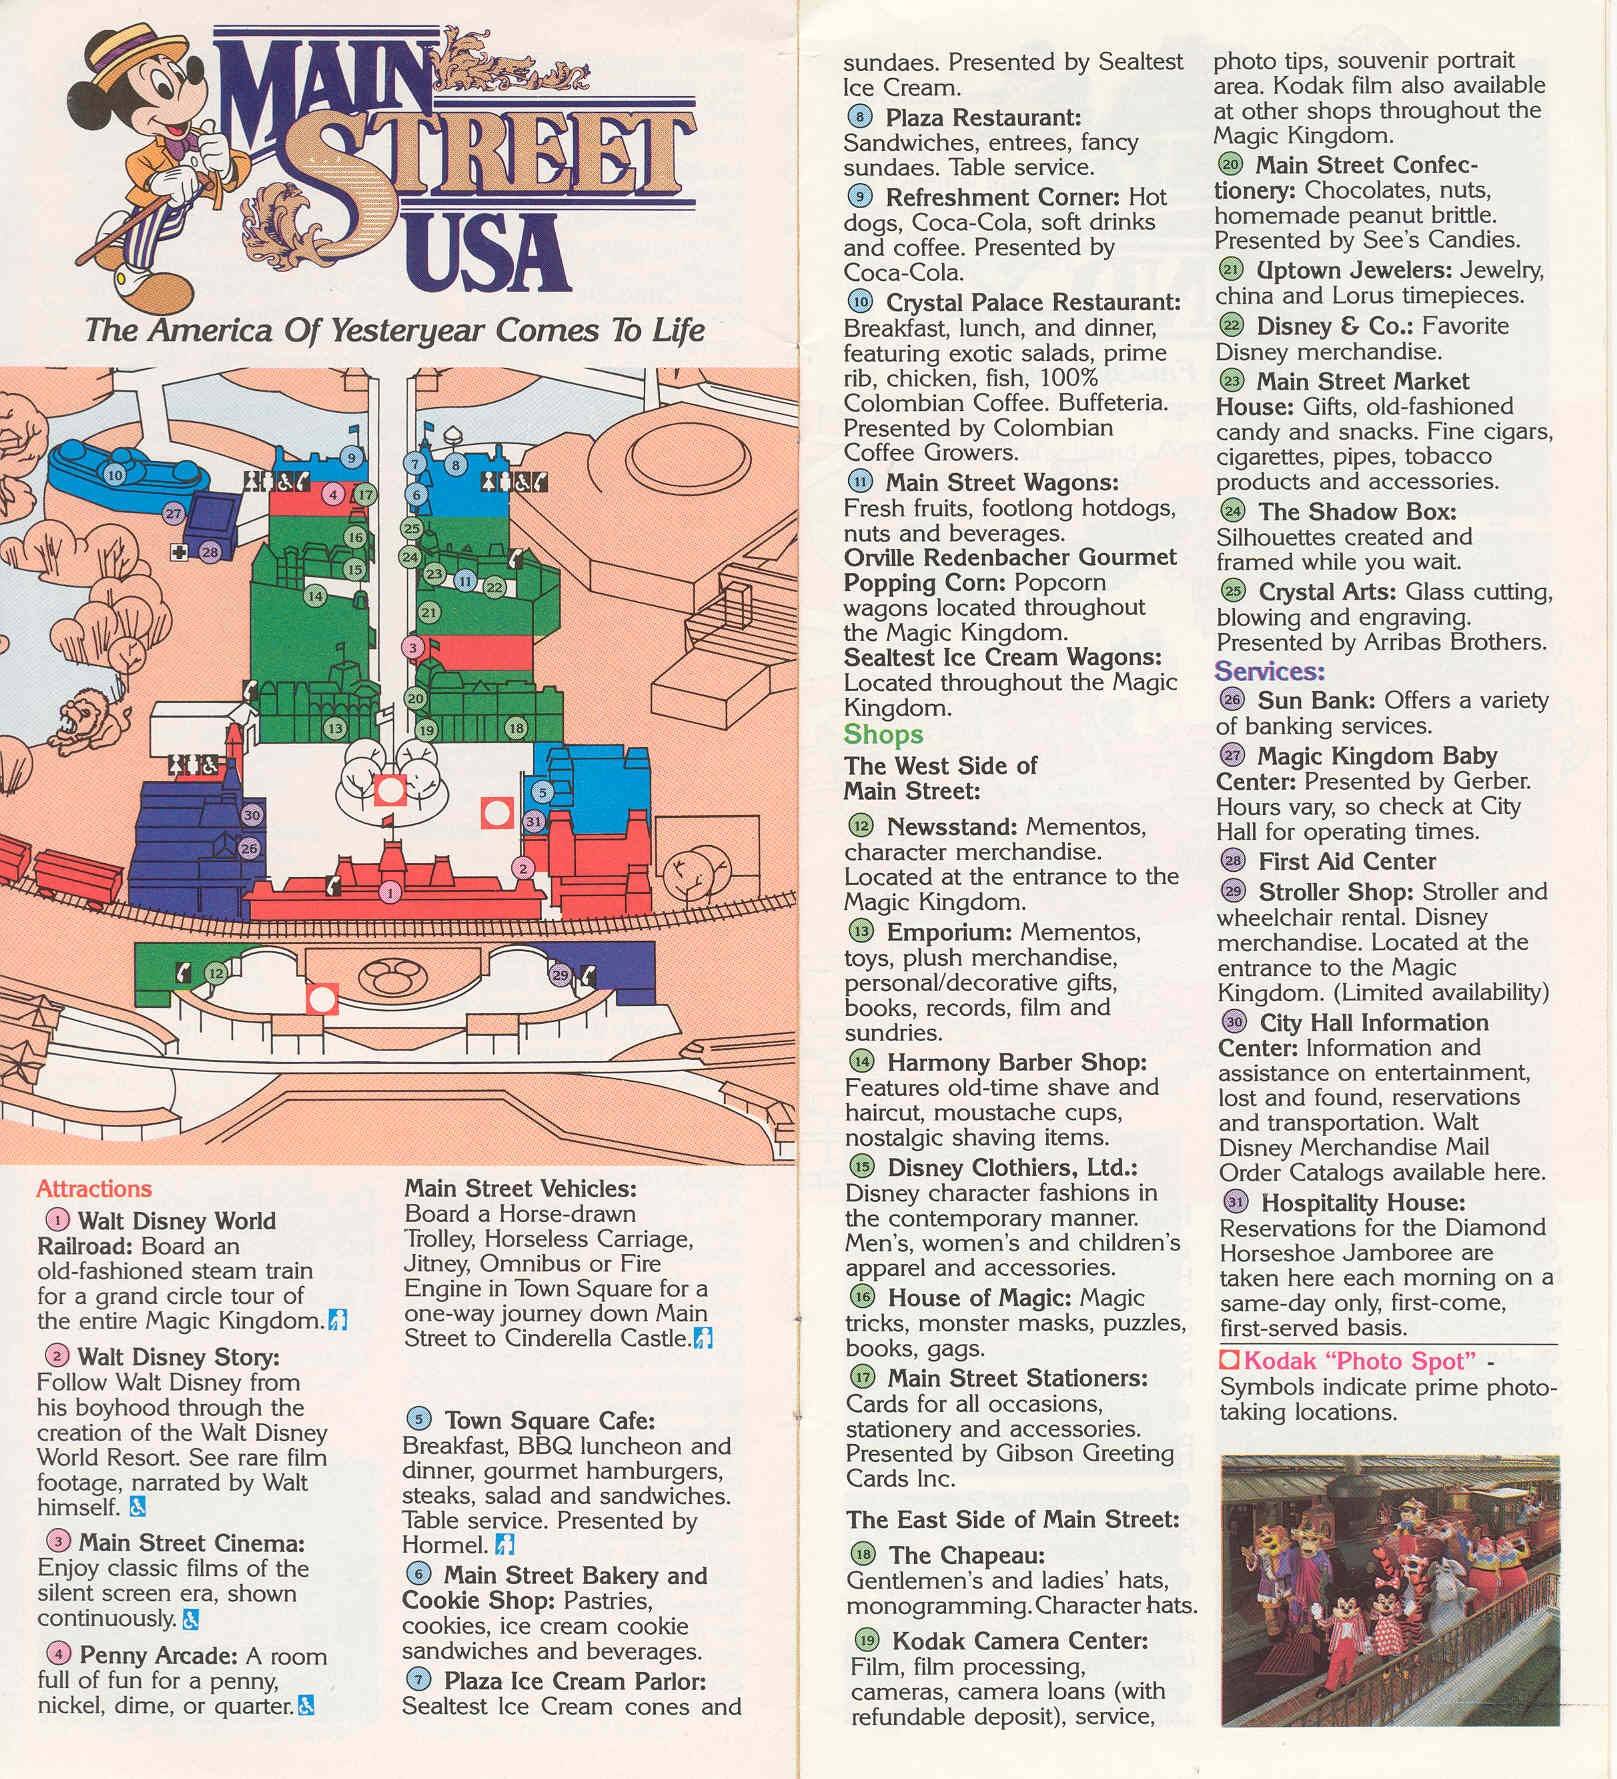 Magic Kingdom Guide Book 1986